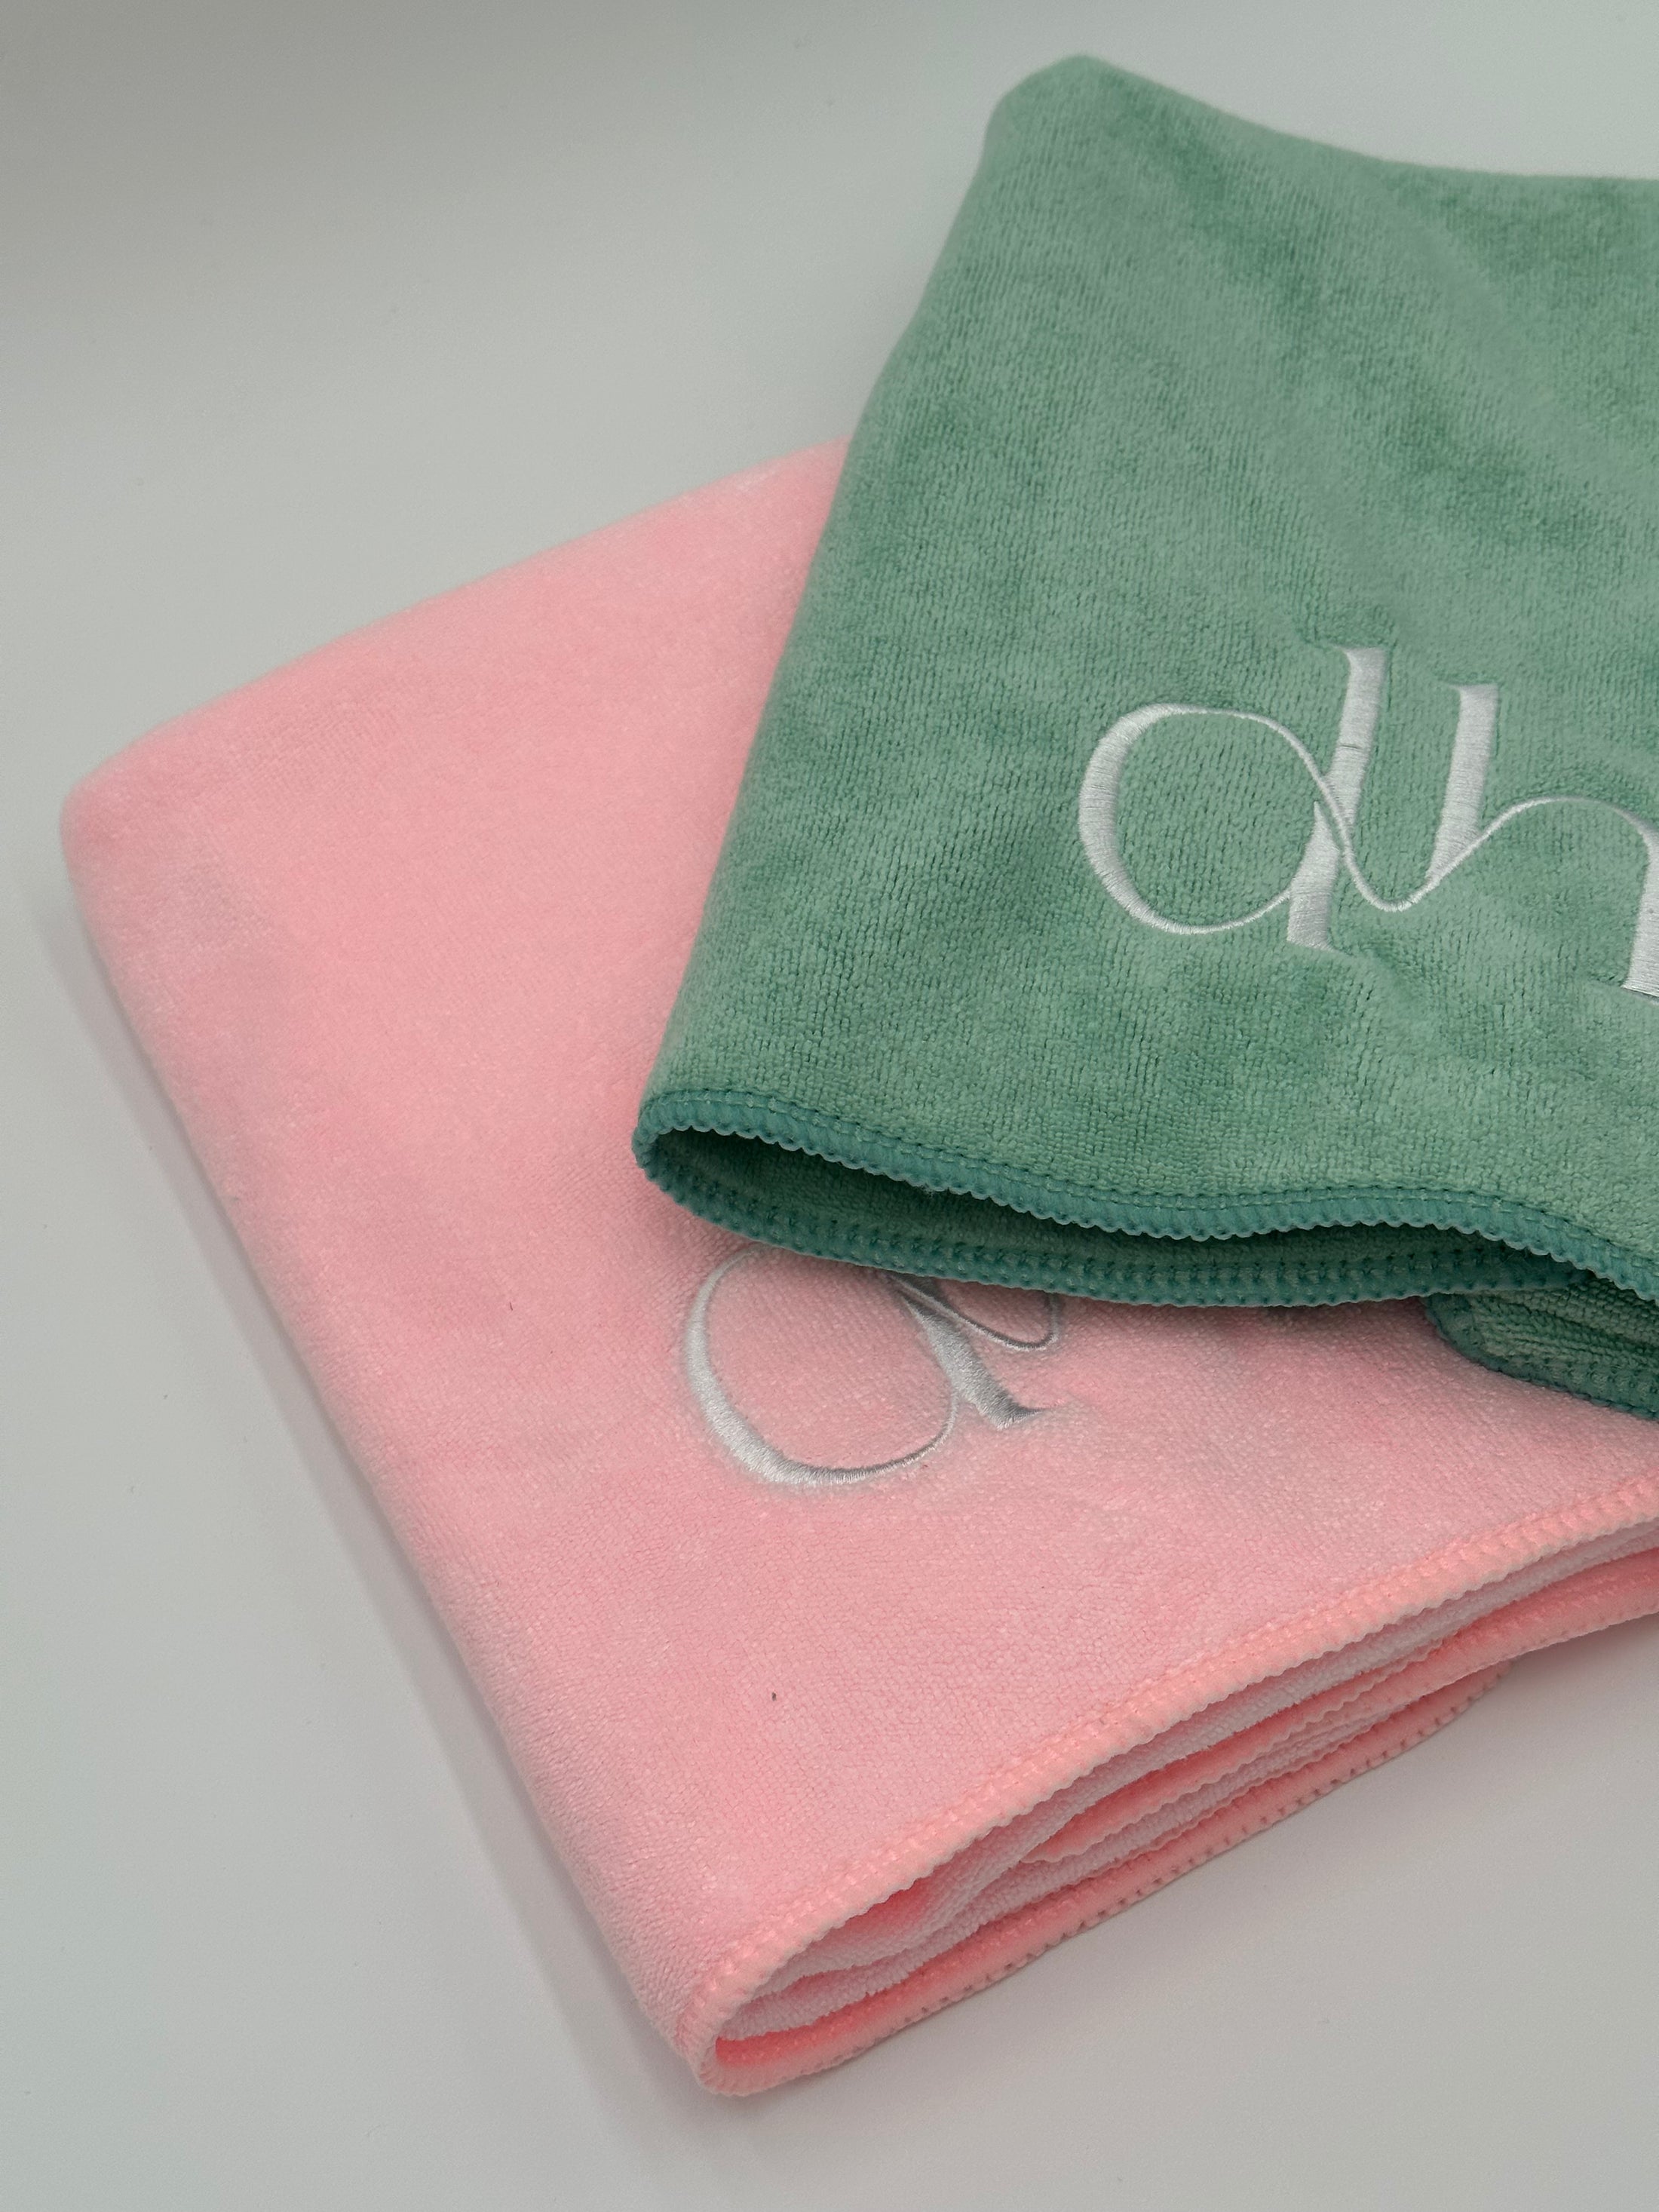 dh Luxury Branded Microfiber Doodle Towel - Premium Pet Drying Solution